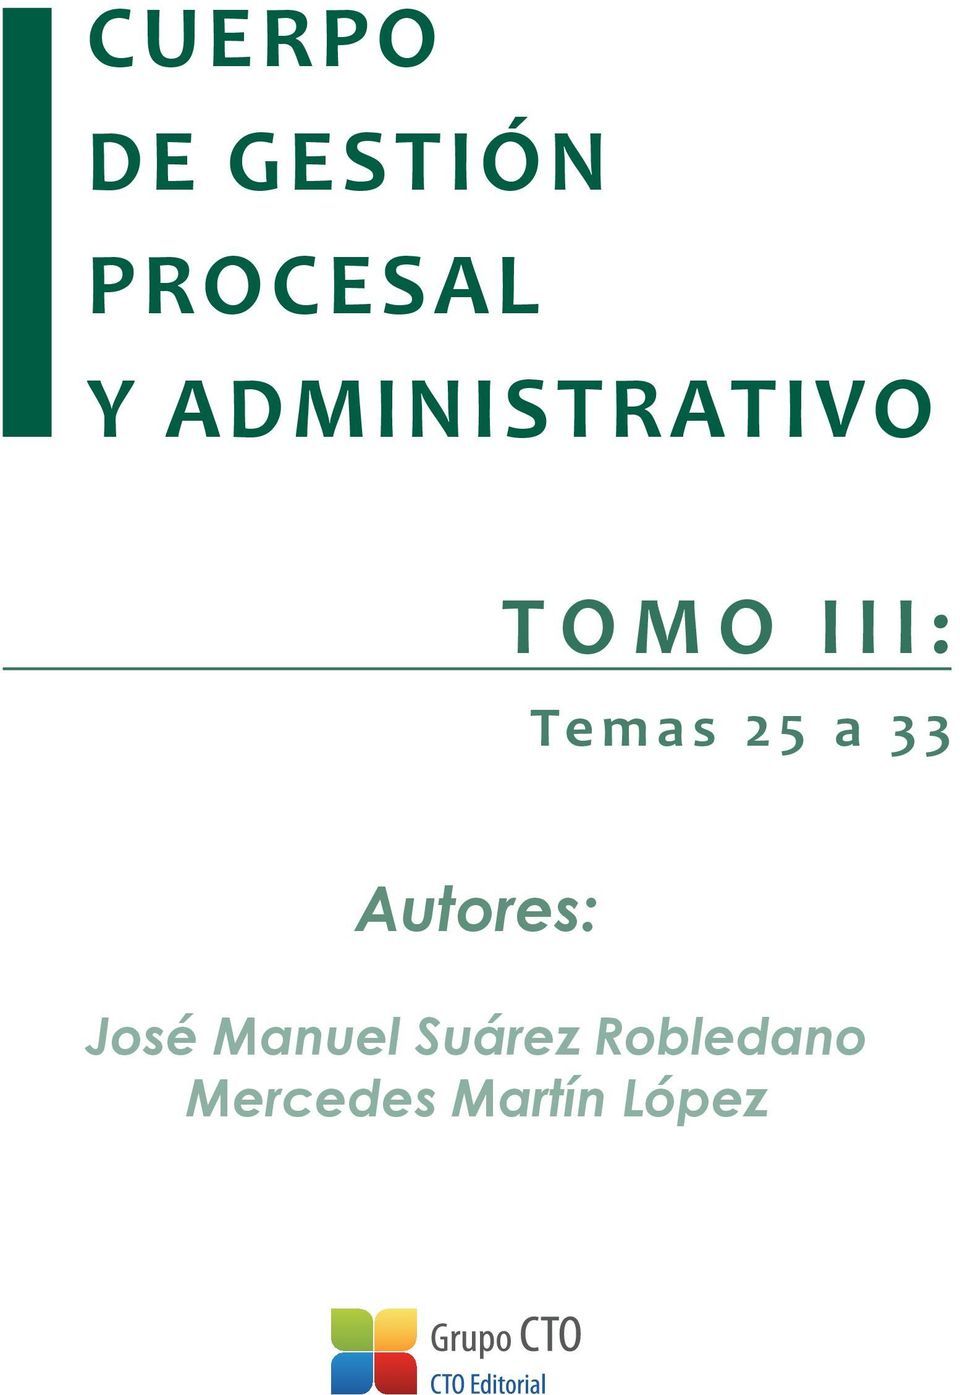 25 a 33 Autores: José Manuel